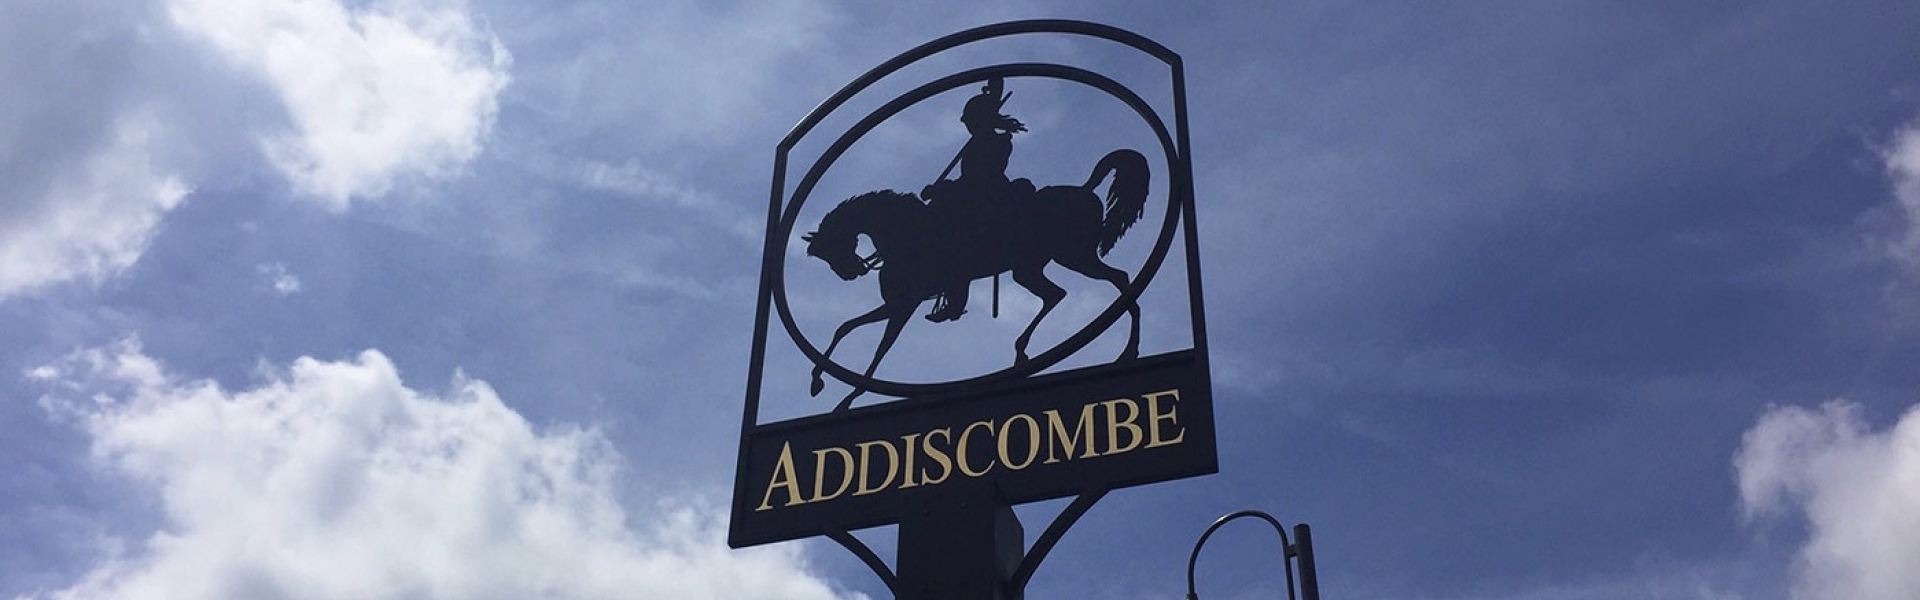 Addiscombe Sign